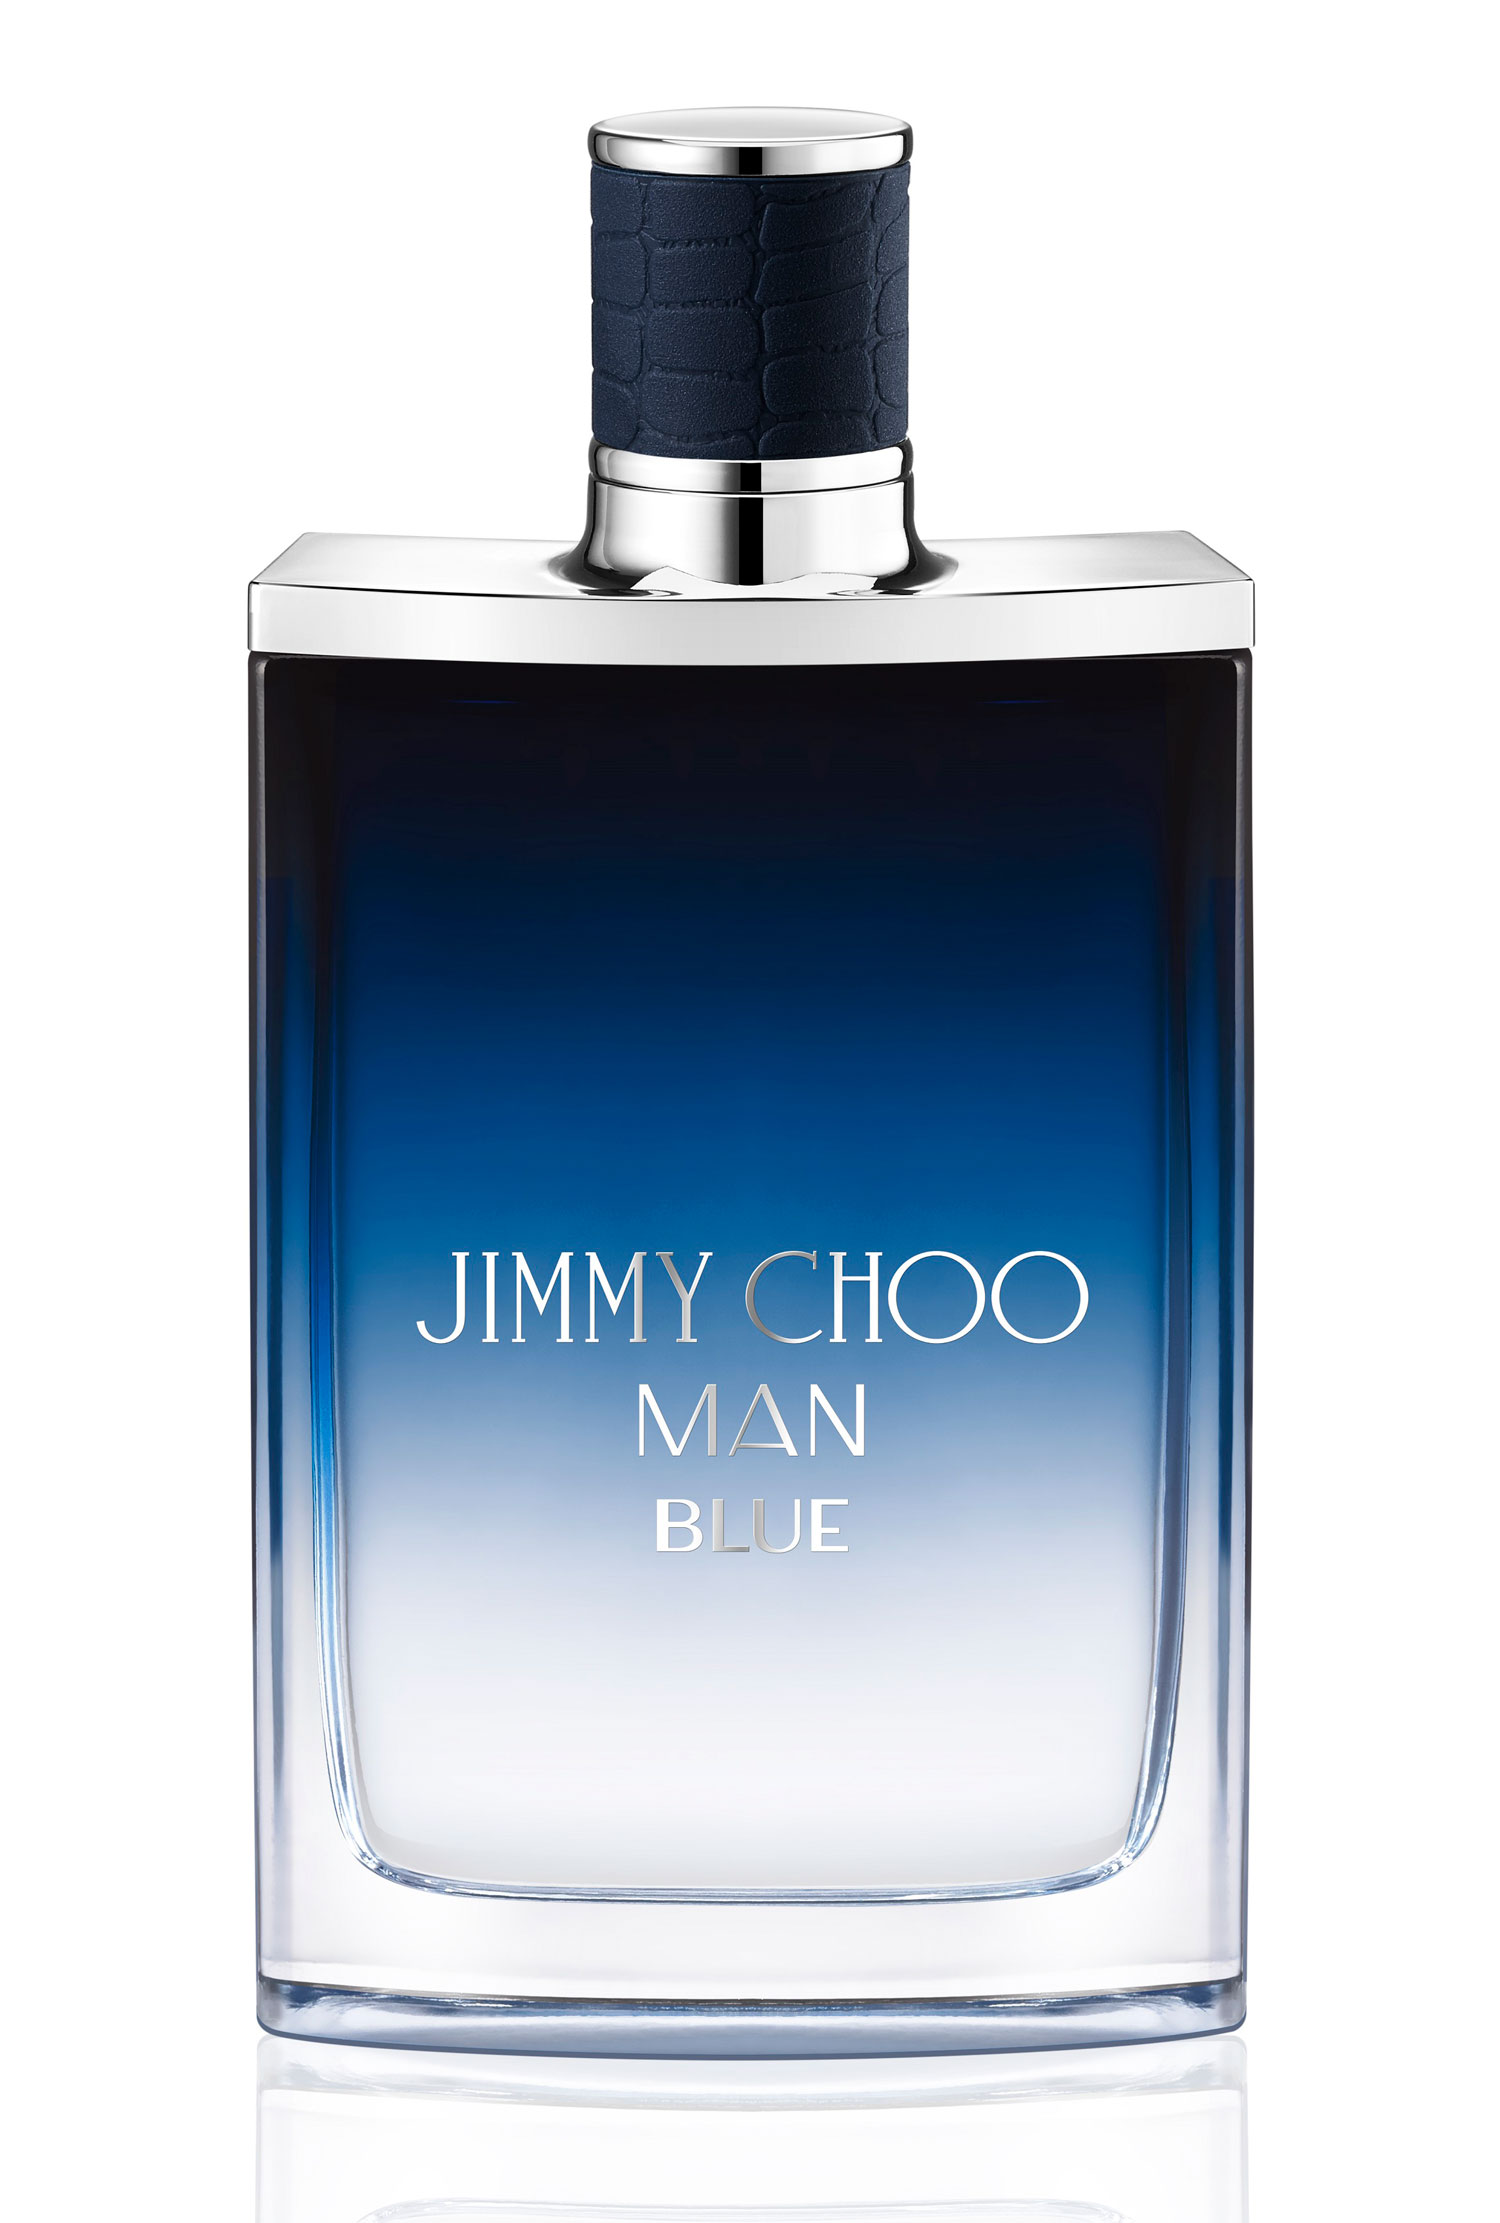 Jimmy Choo Man Blue Jimmy Choo cologne - a new fragrance for men 2018